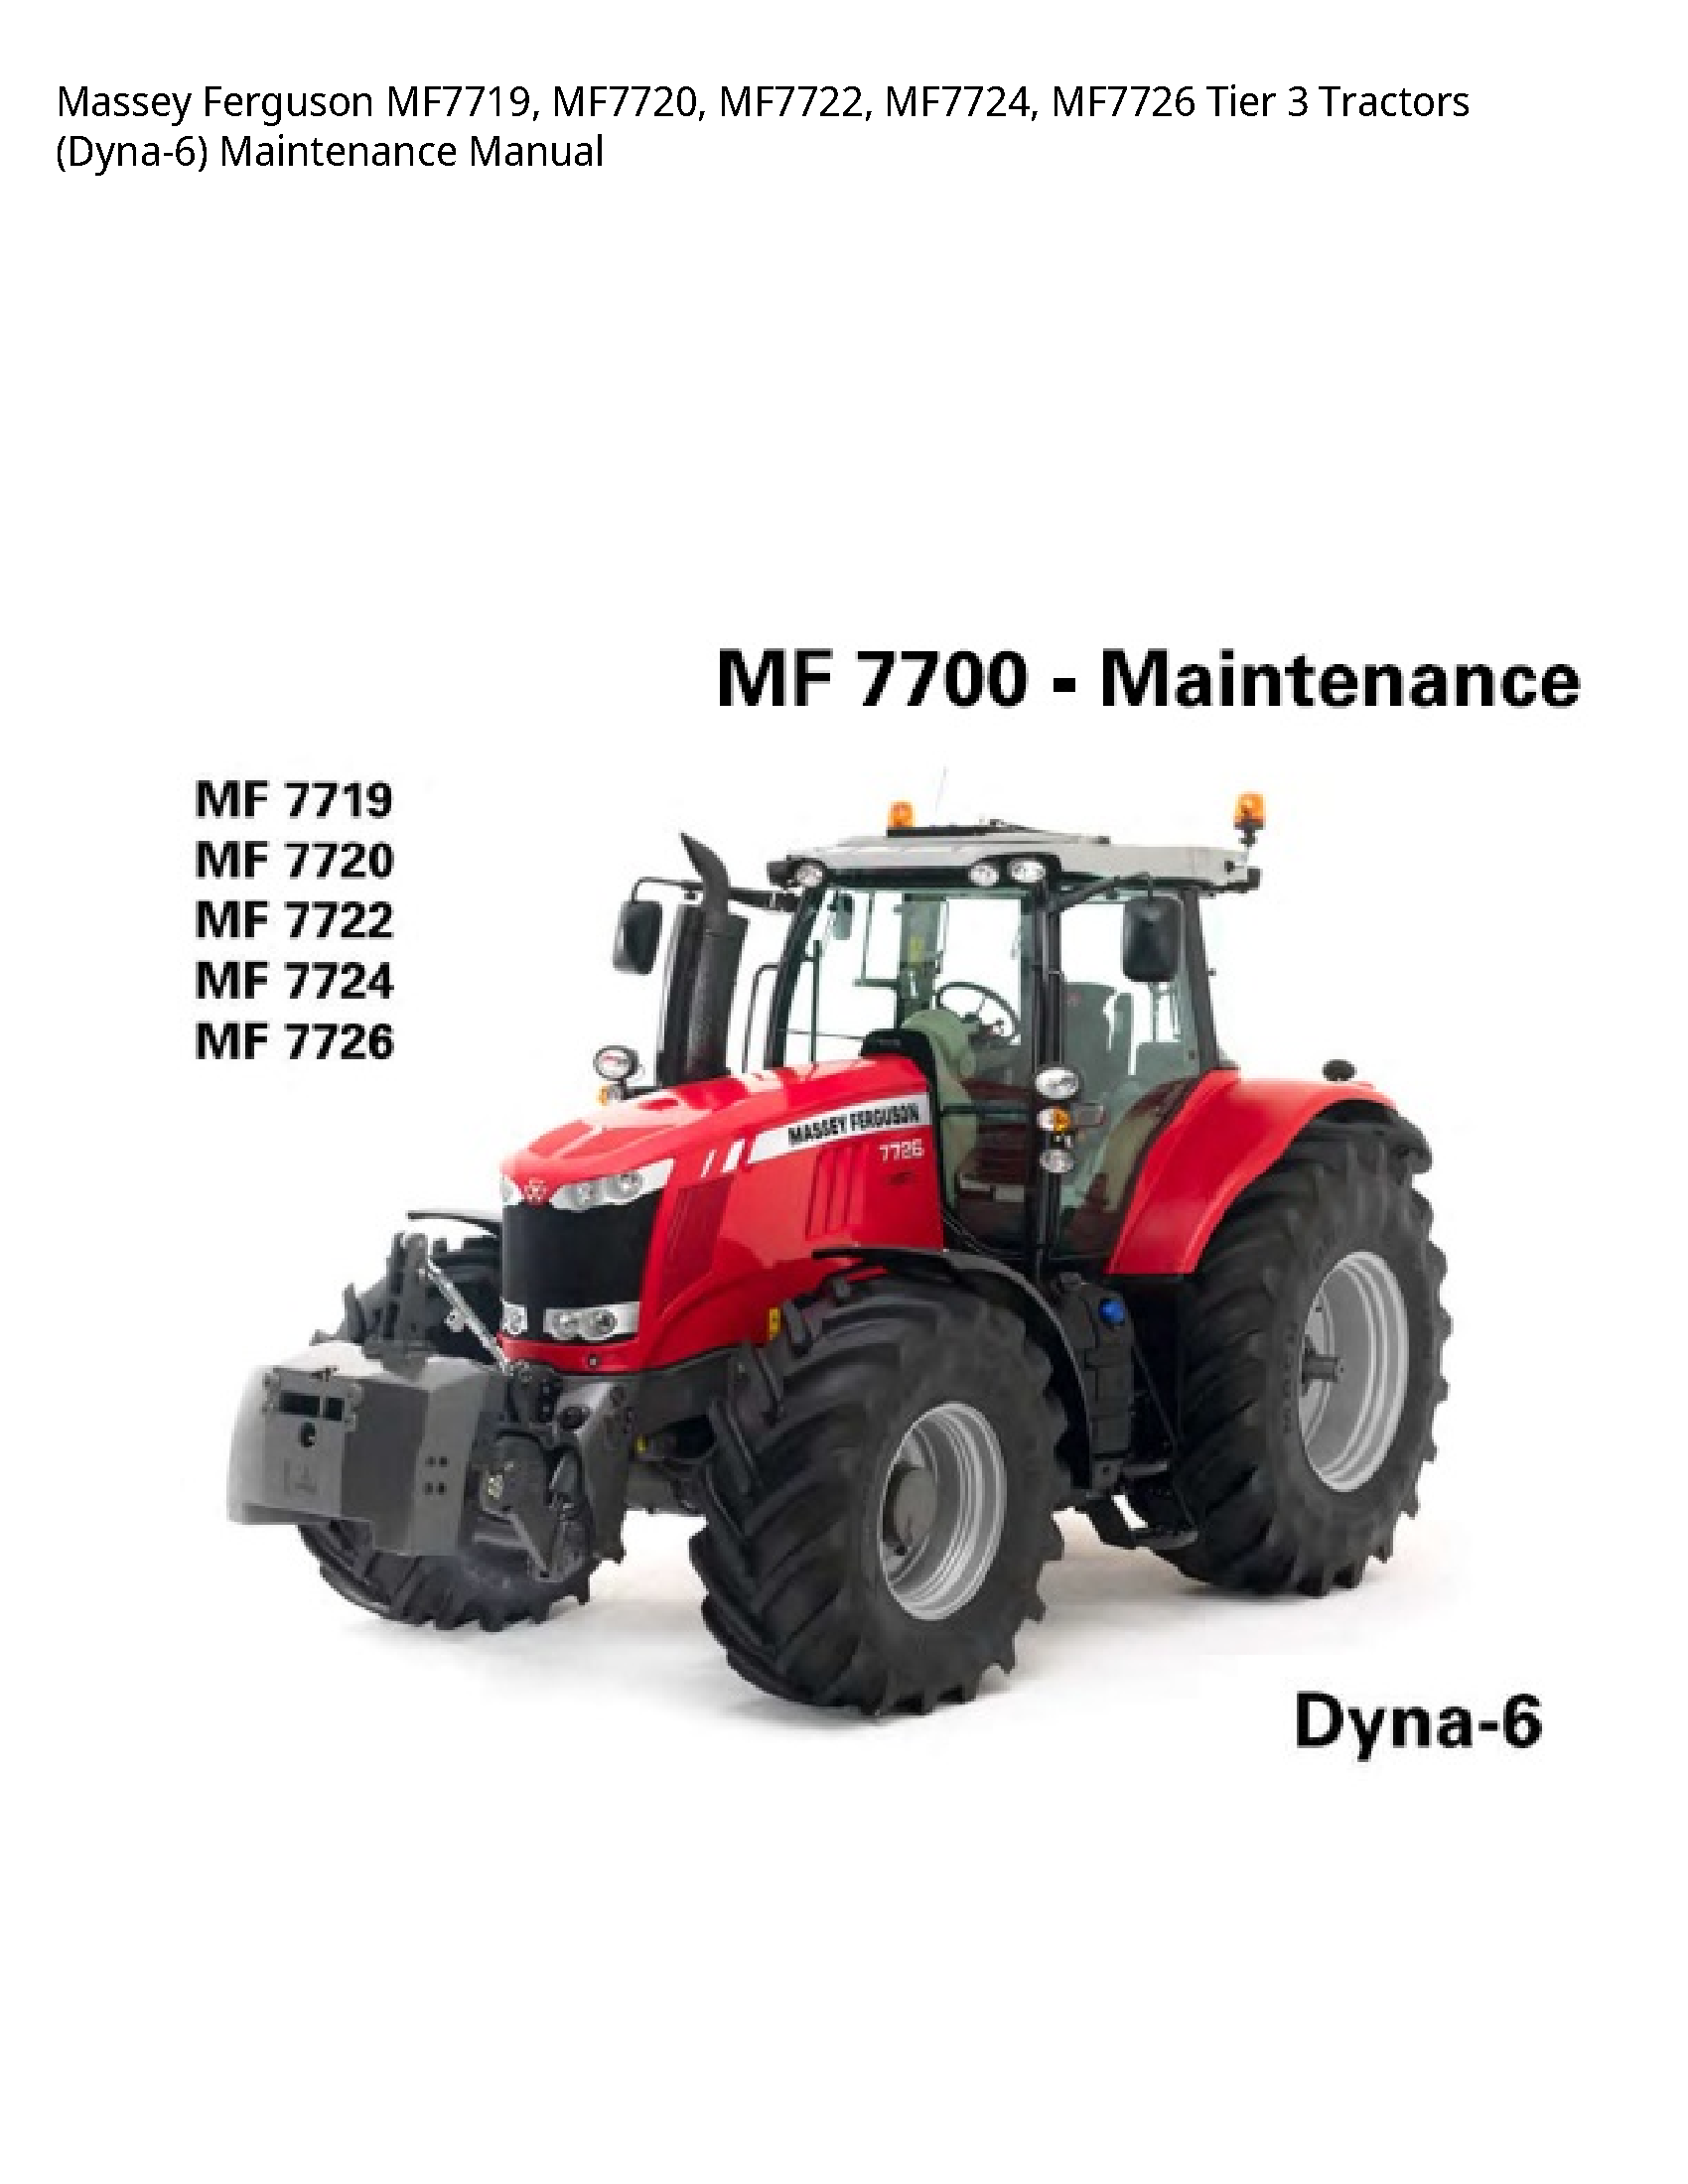 Massey Ferguson MF7719 Tier Tractors Maintenance manual